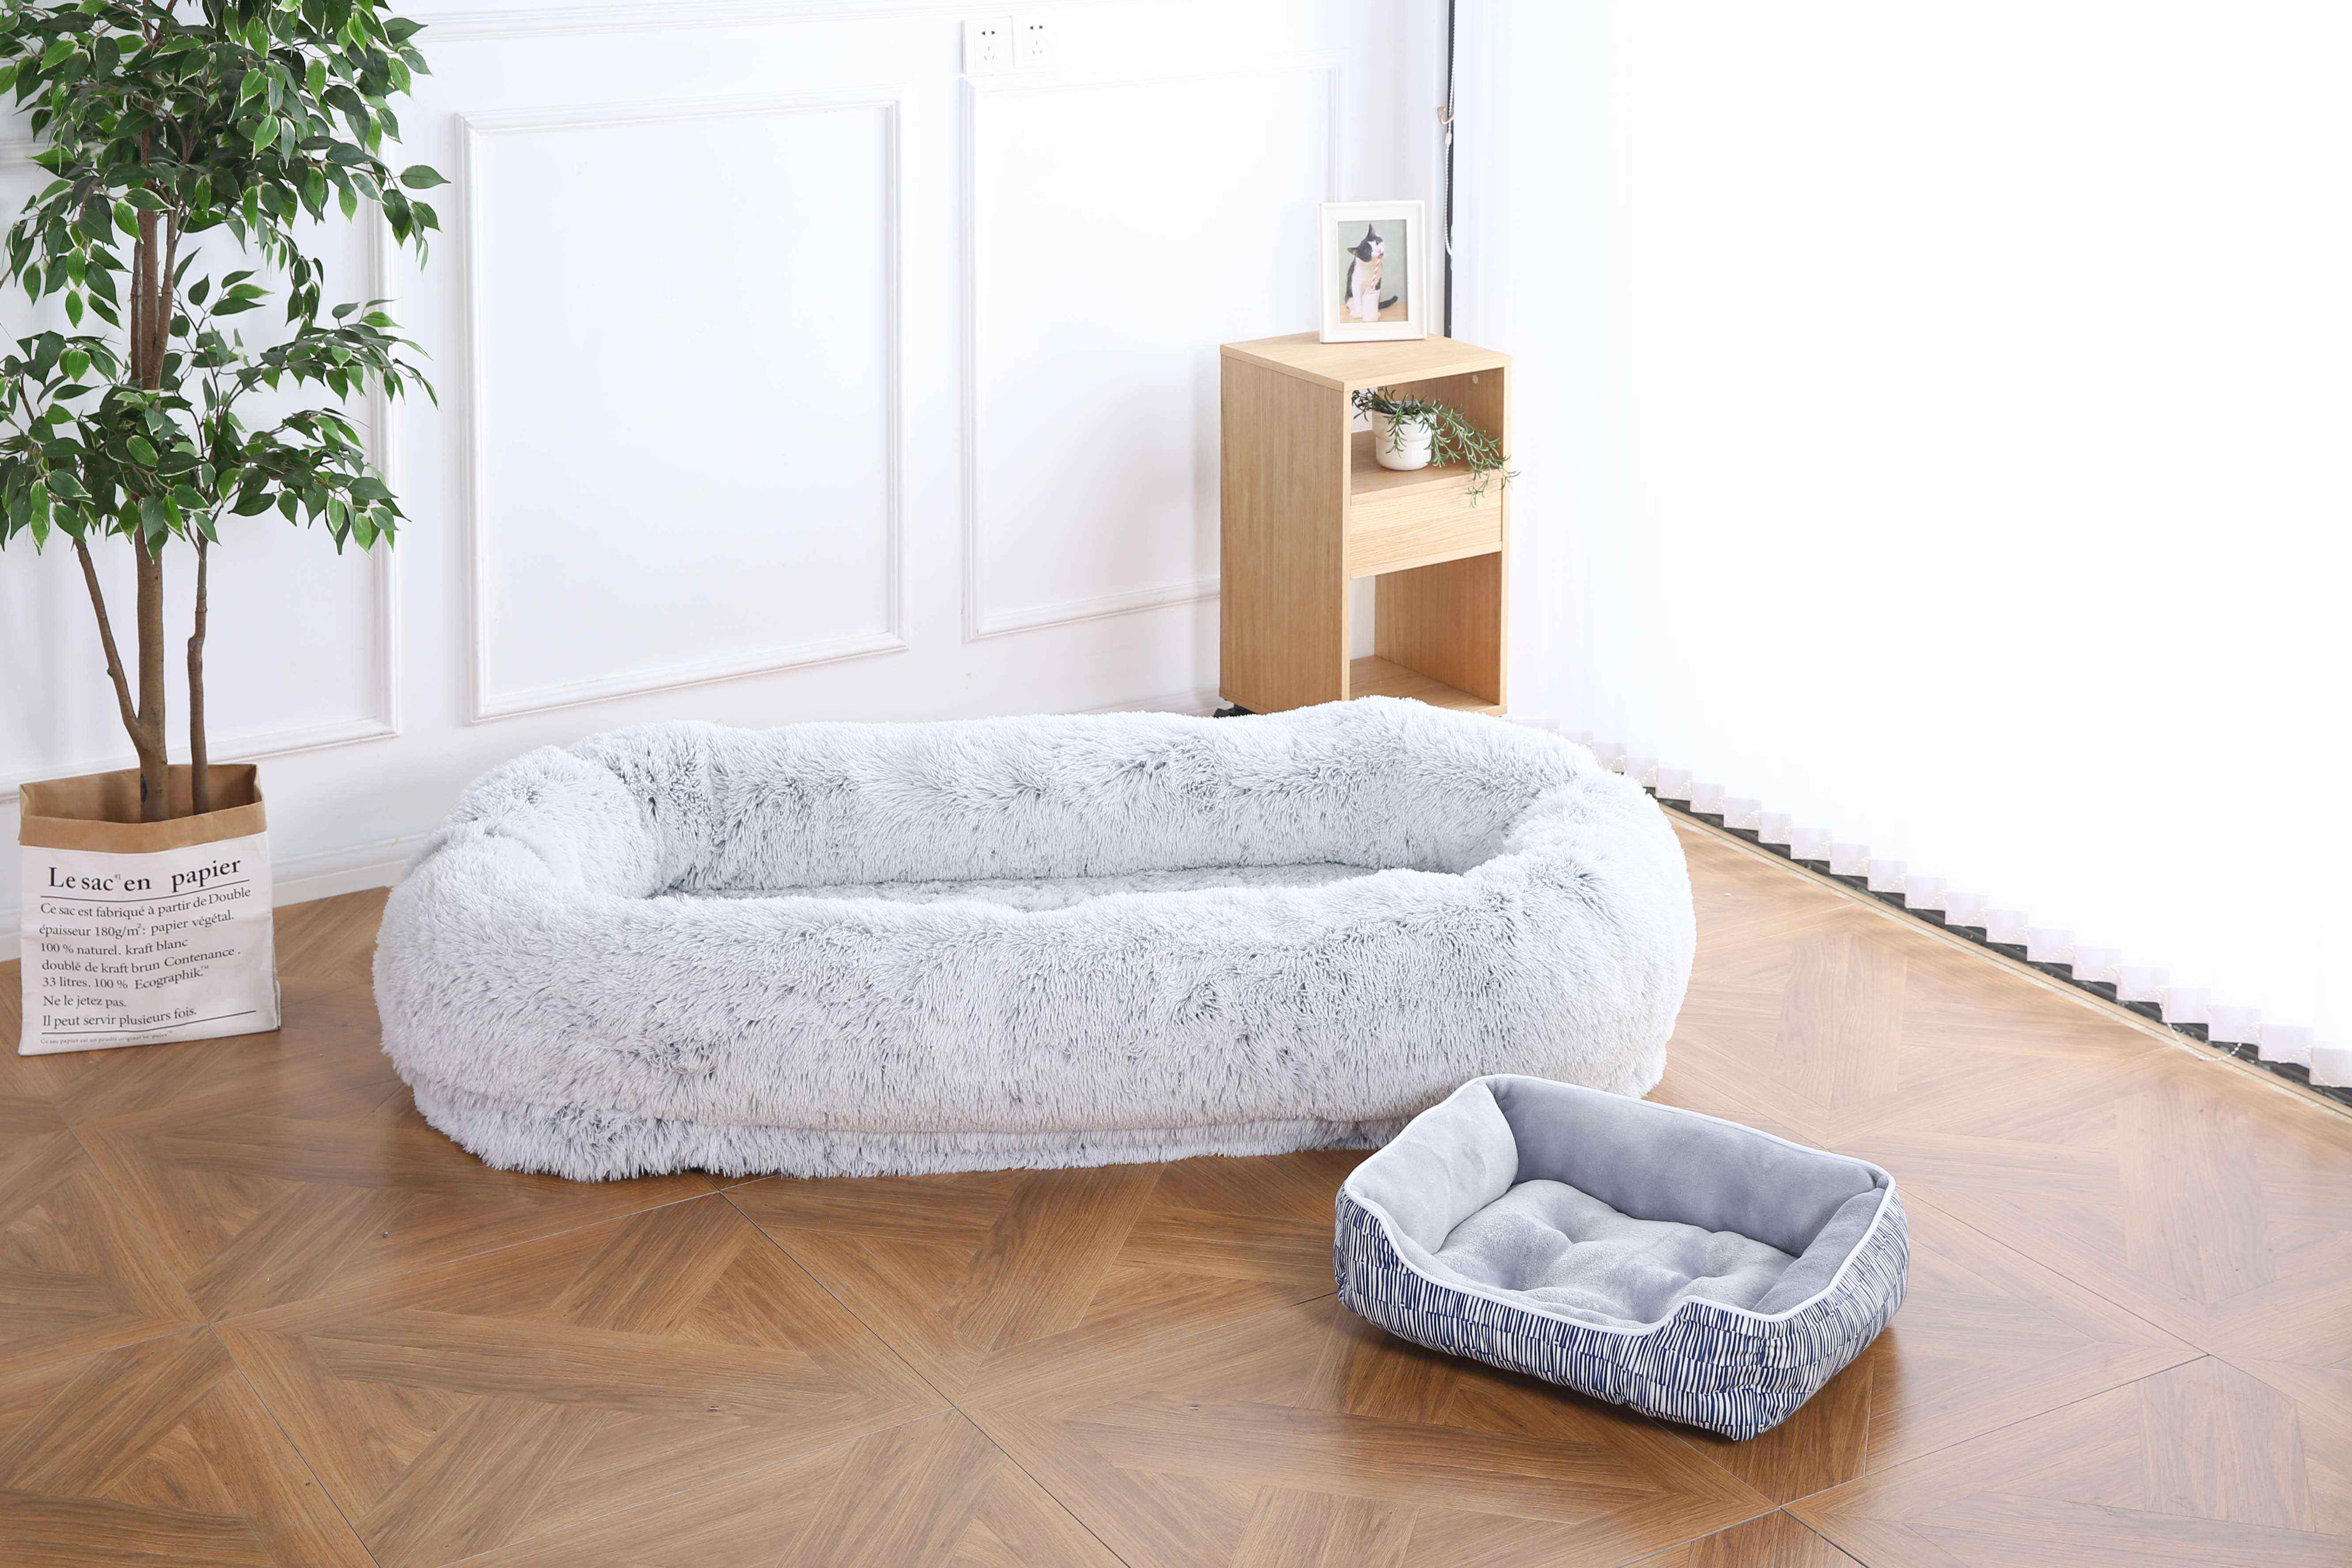  Extra Large 185Cm Human Size Dog Bed